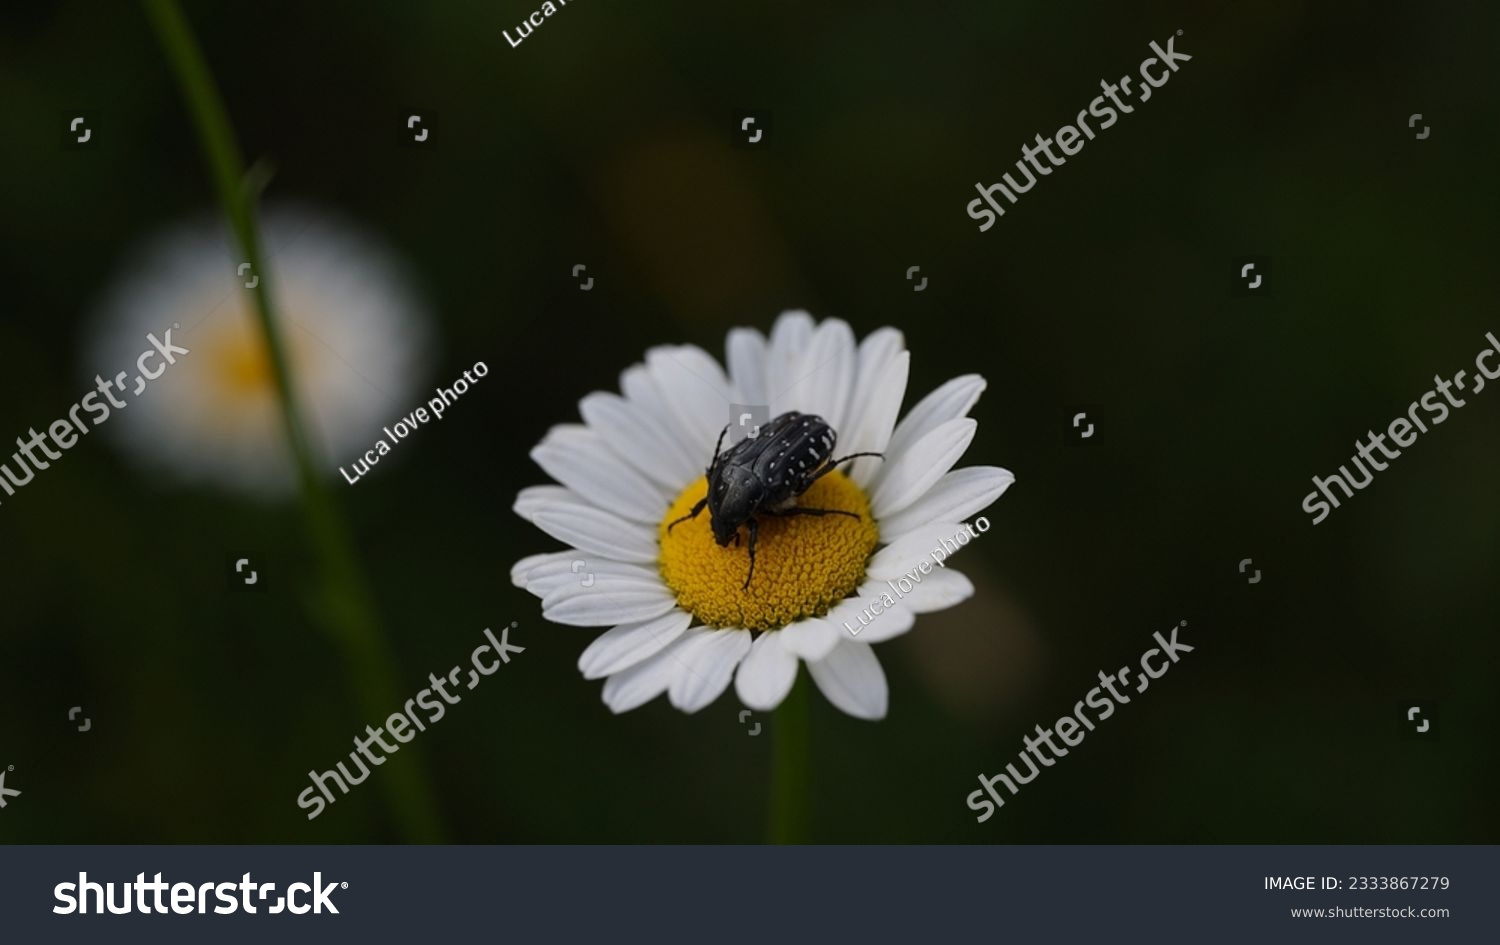 Garden chafer beetle: A beneficial insect for pollination and organic recycling. (Oxythyrea funesta). Summer season #2333867279